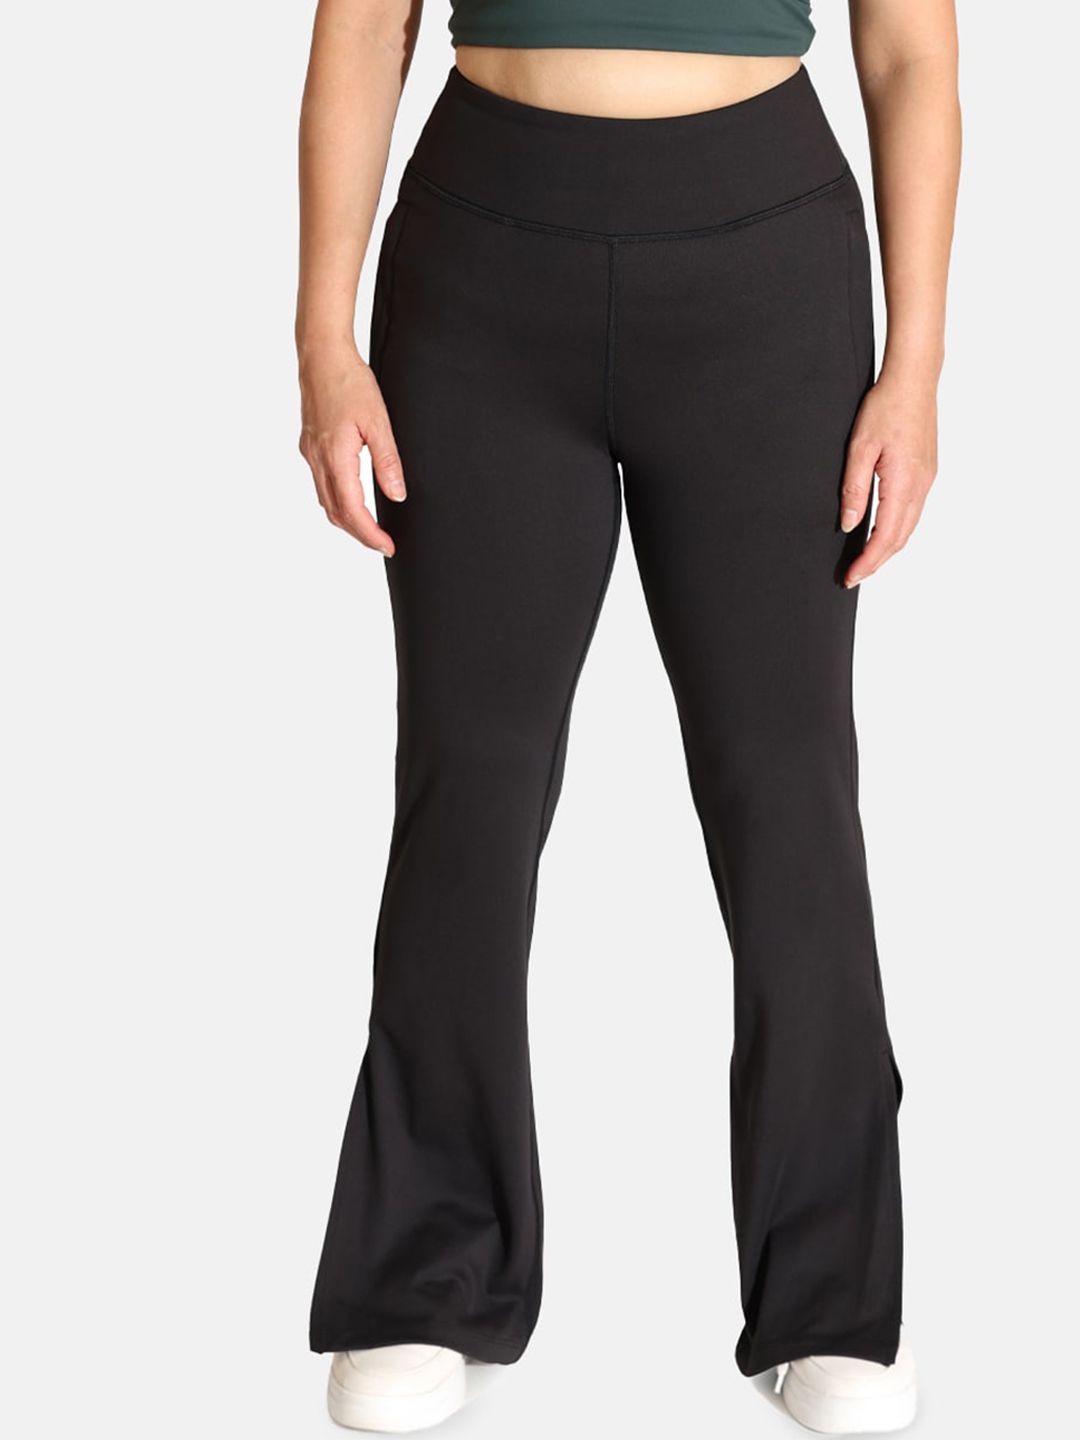 Buy Athlisis Women Black Quick Dry Flare Pants online